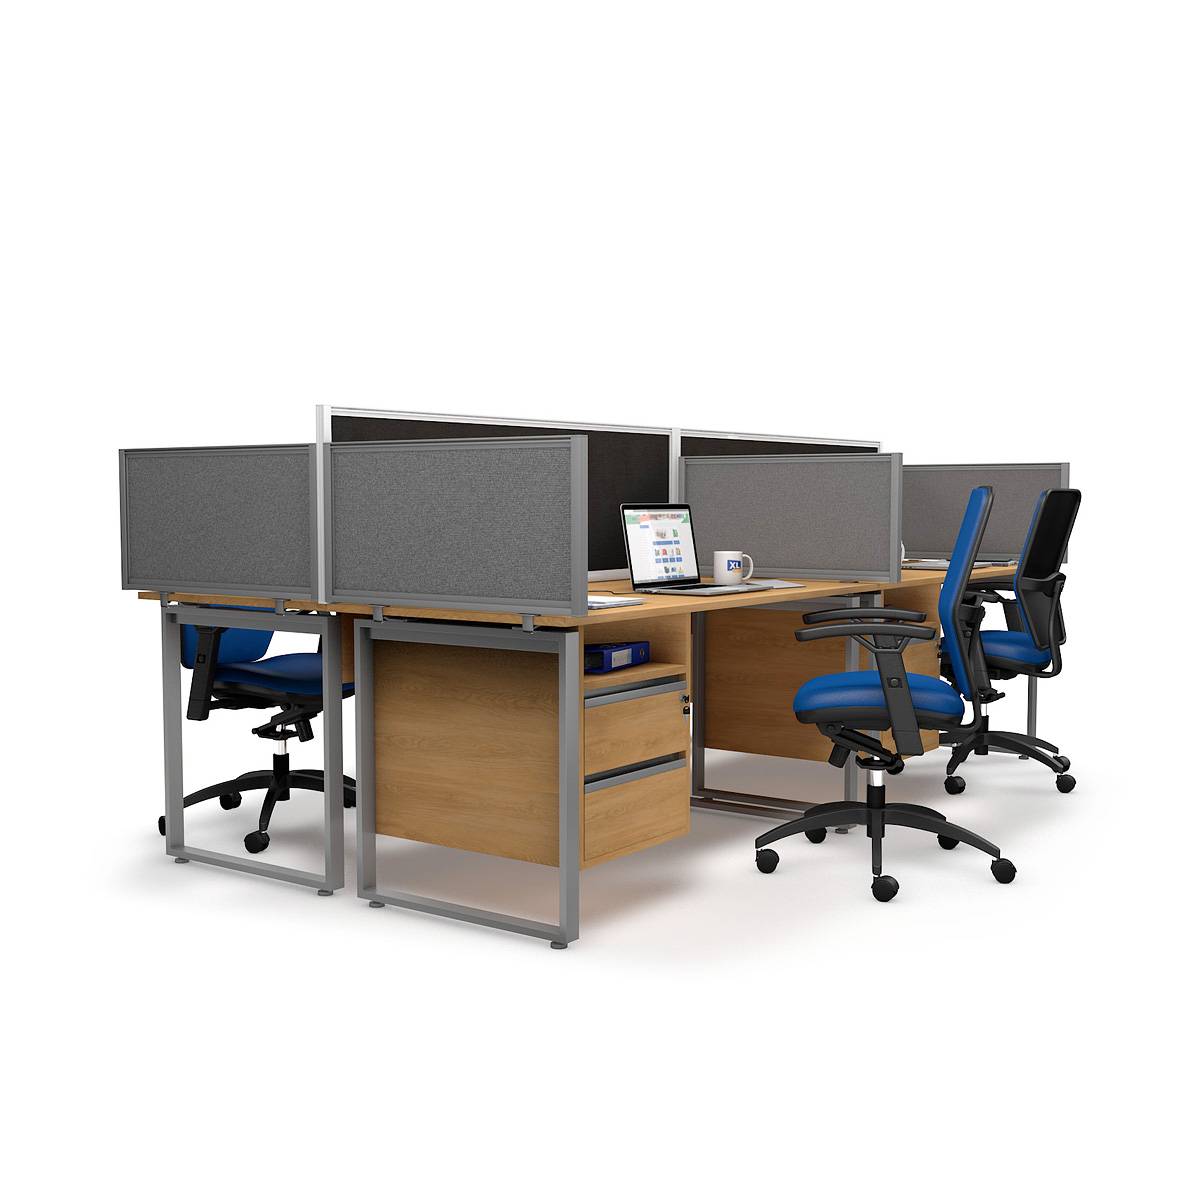 FRONTIER® Acoustic Desk Divider Screen